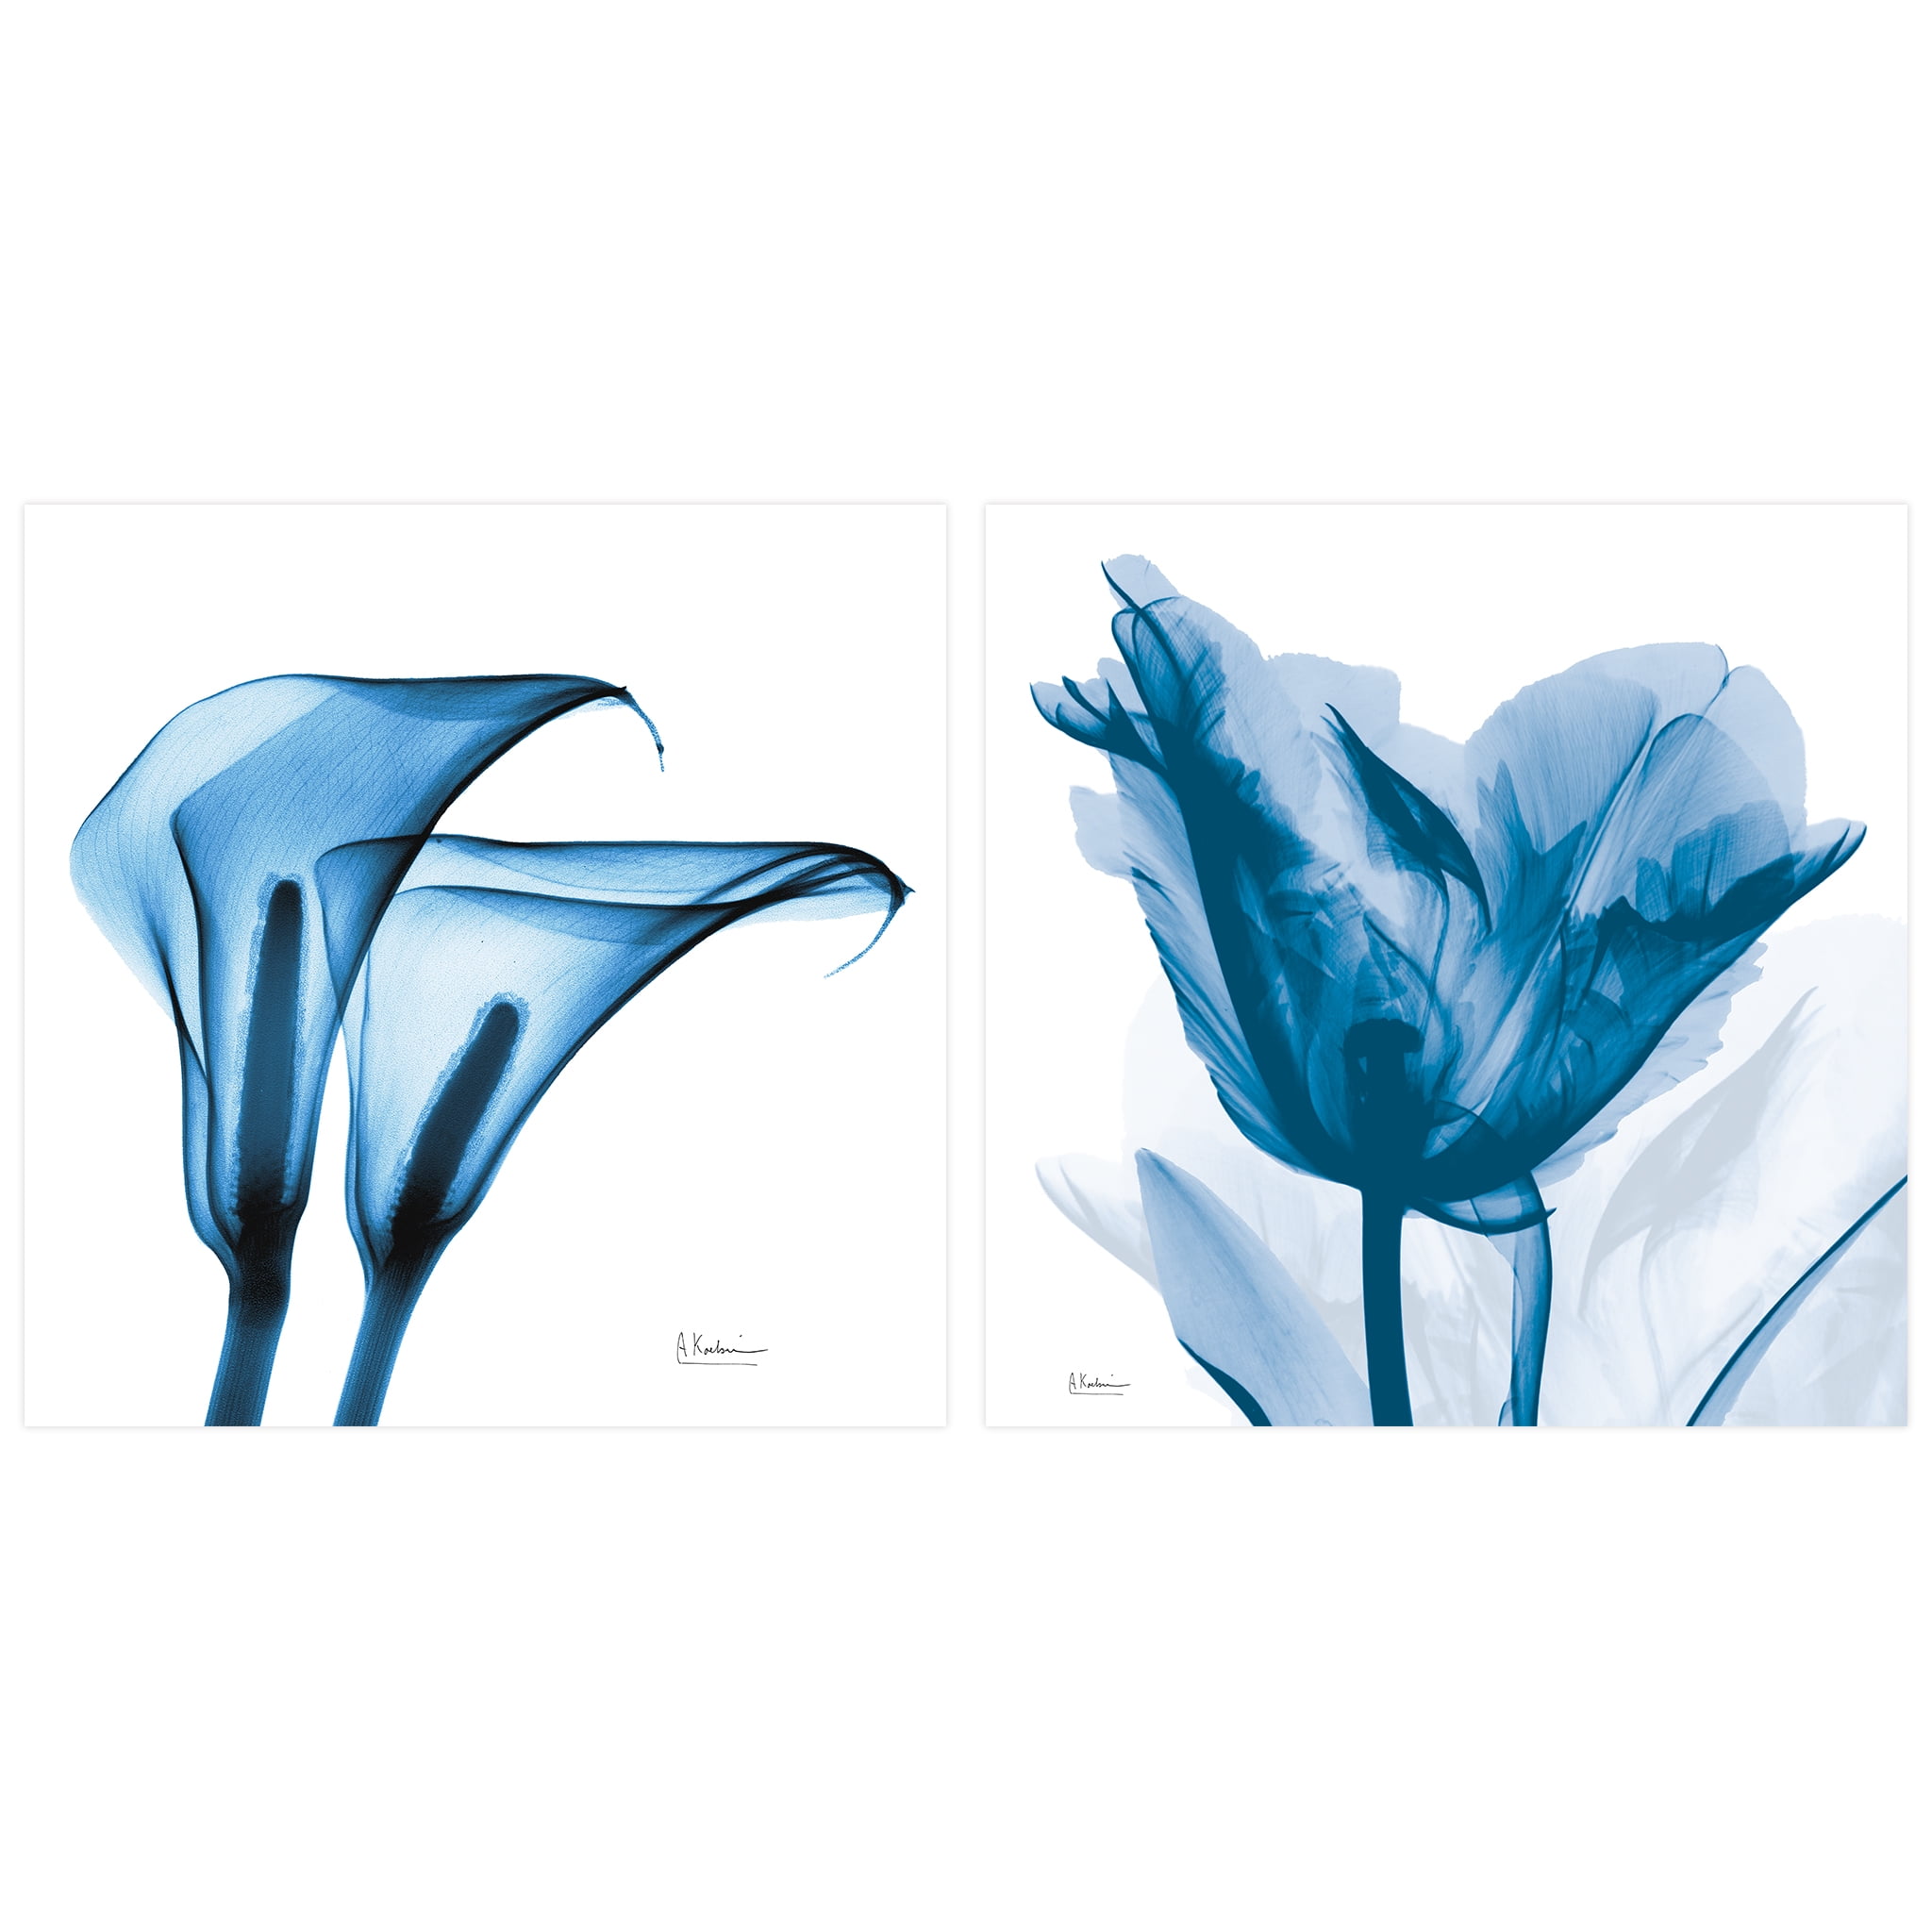 Empire Art Direct Lusty Blue Tulip & Indigo Calla Lililes Unframed Tempered Glass Wall Art, 24"x24" -New